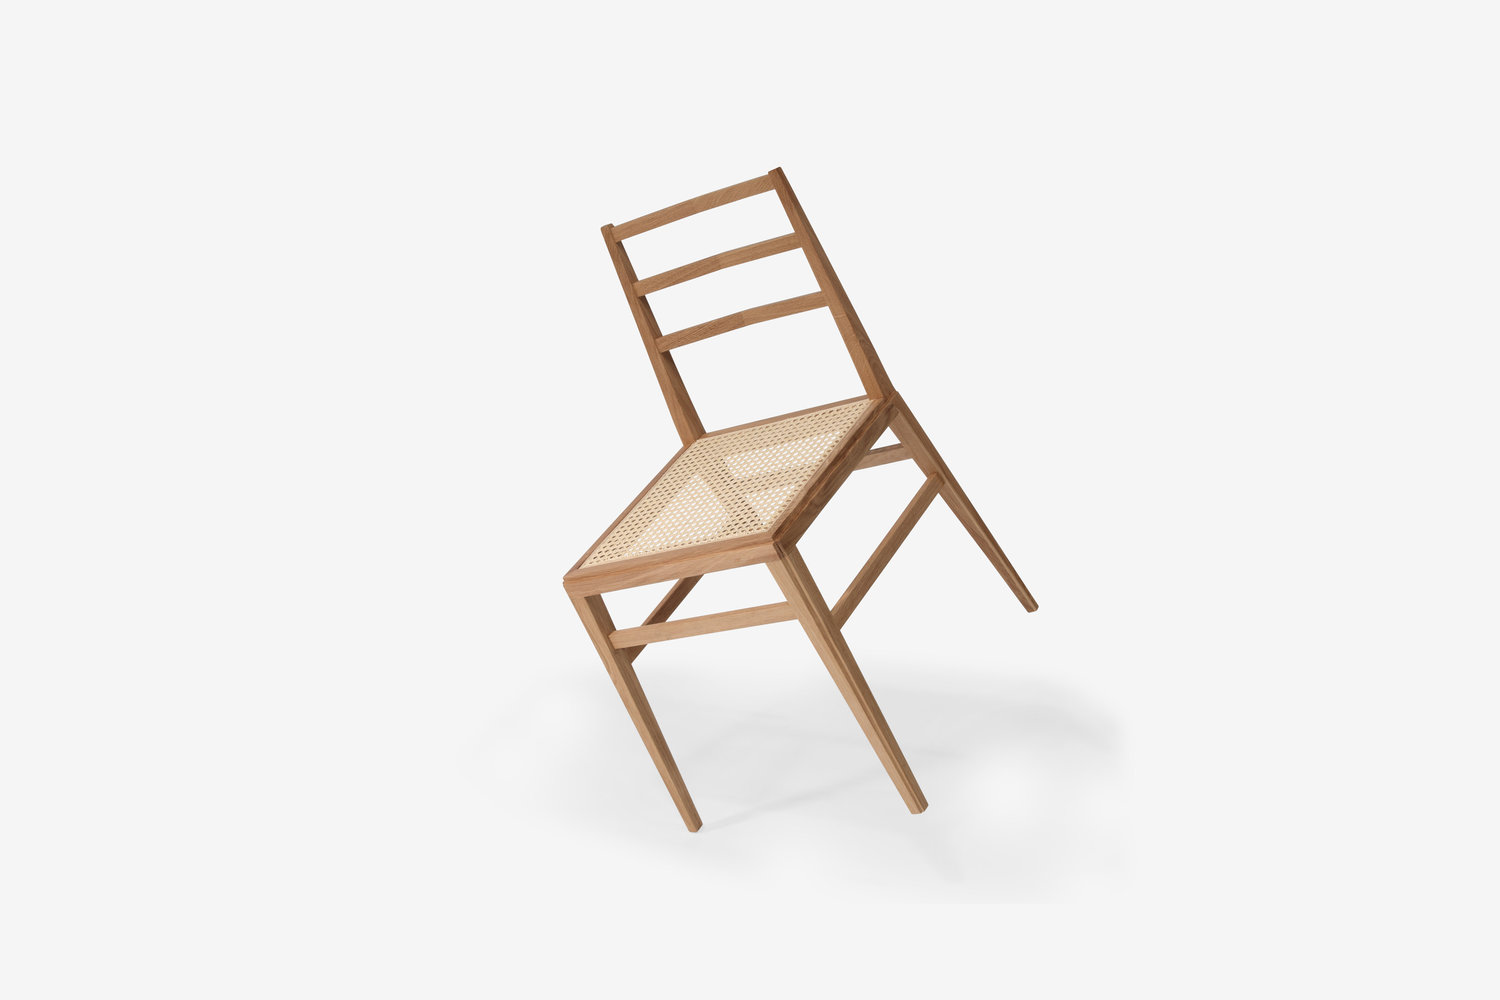 Fuschini fabrica la silla de madera más ligera del mundo